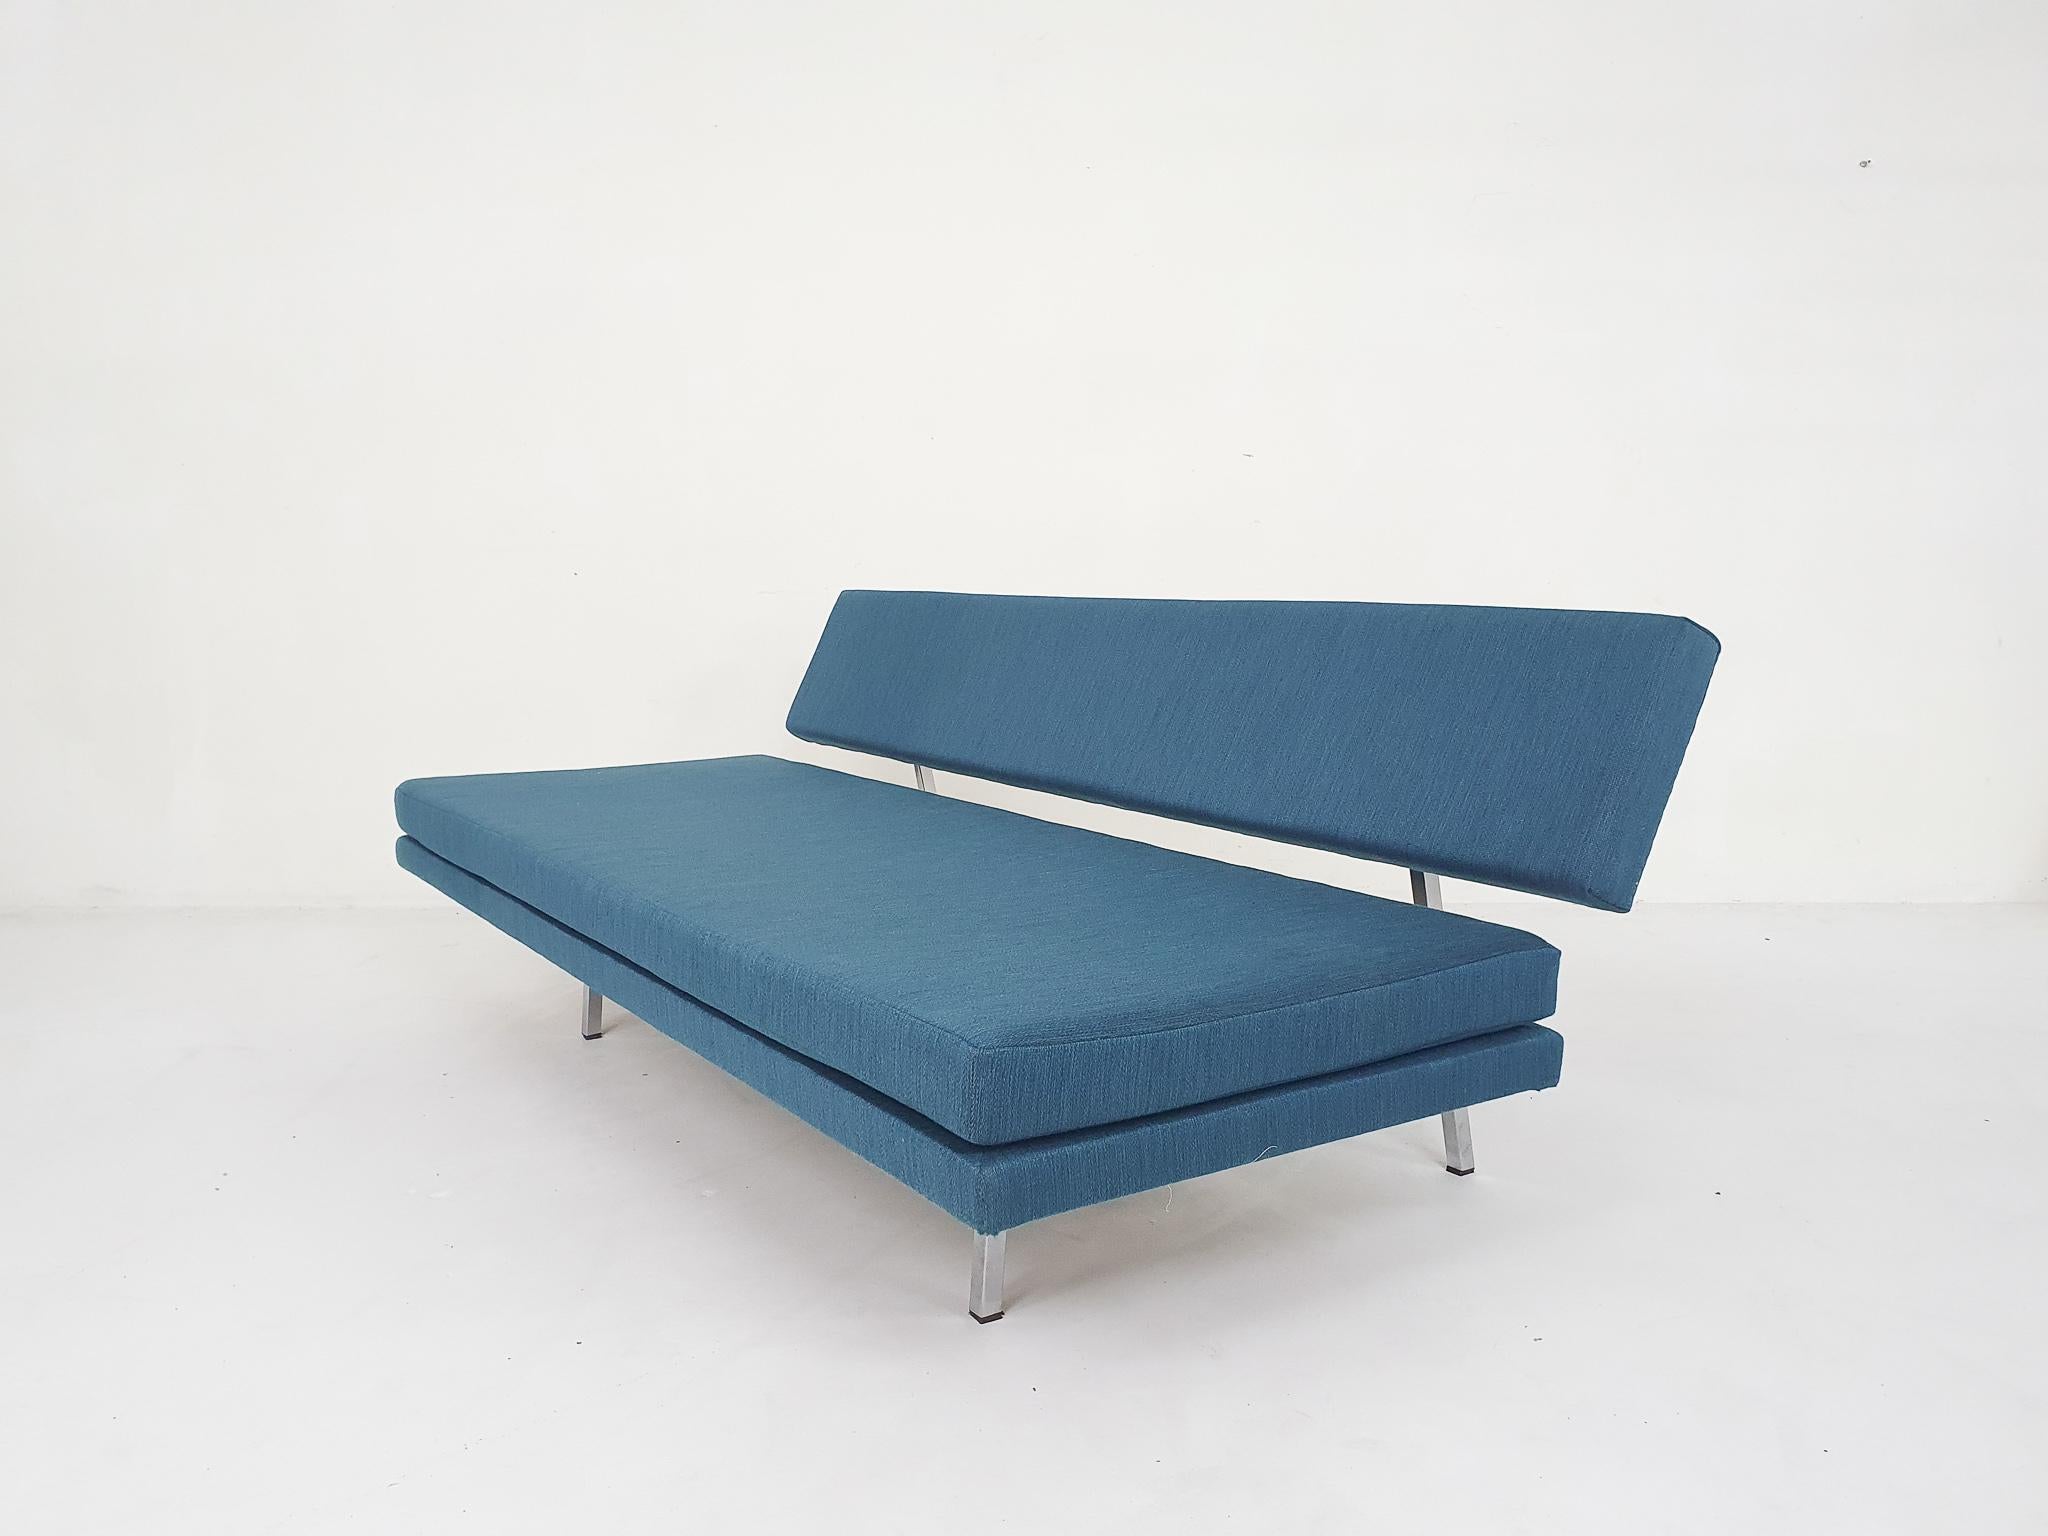 Mid-Century Modern BR 02 sleeper sofa by Martin Visser for ’t Spectrum, The Netherlands, 1958